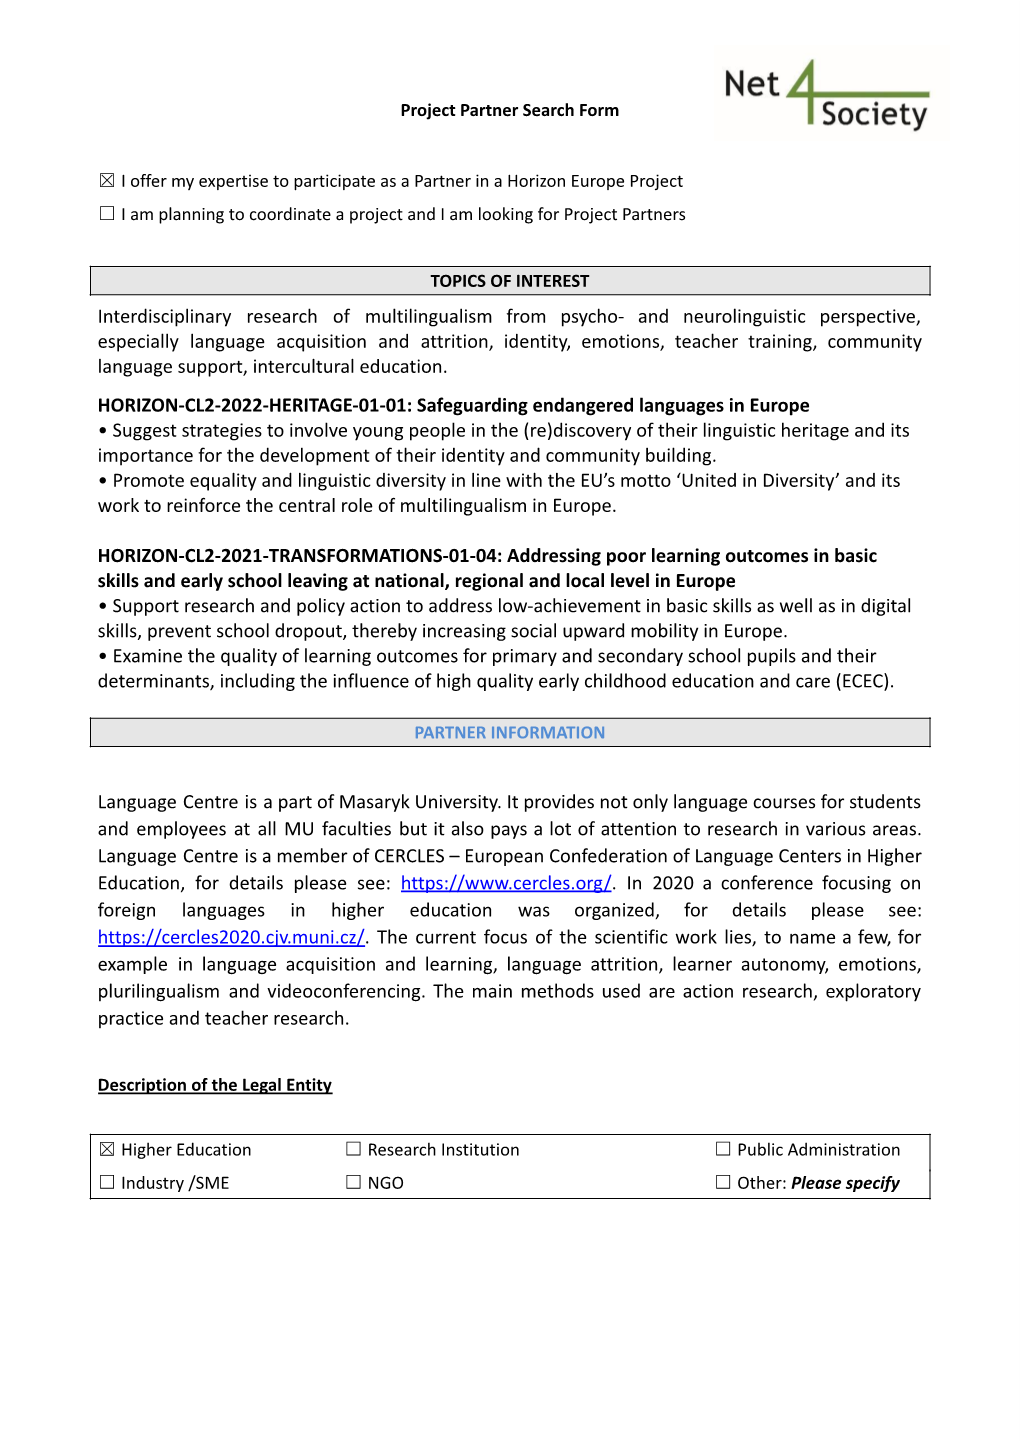 Partner Search Form CZ MUNI Brno June 2021 Dolezi.Docx